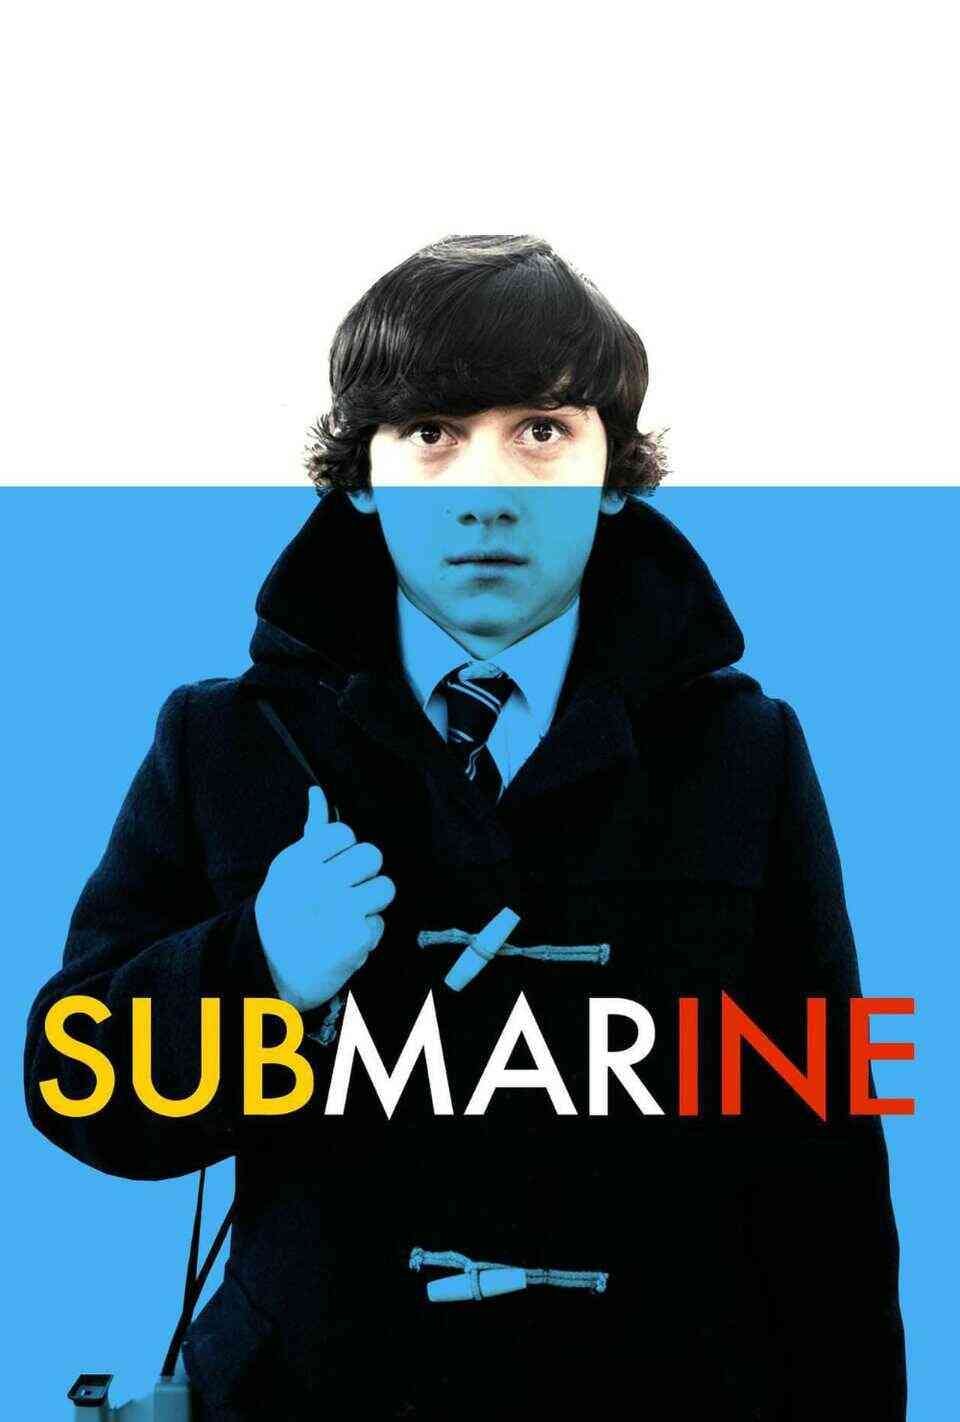 Read Submarine screenplay.